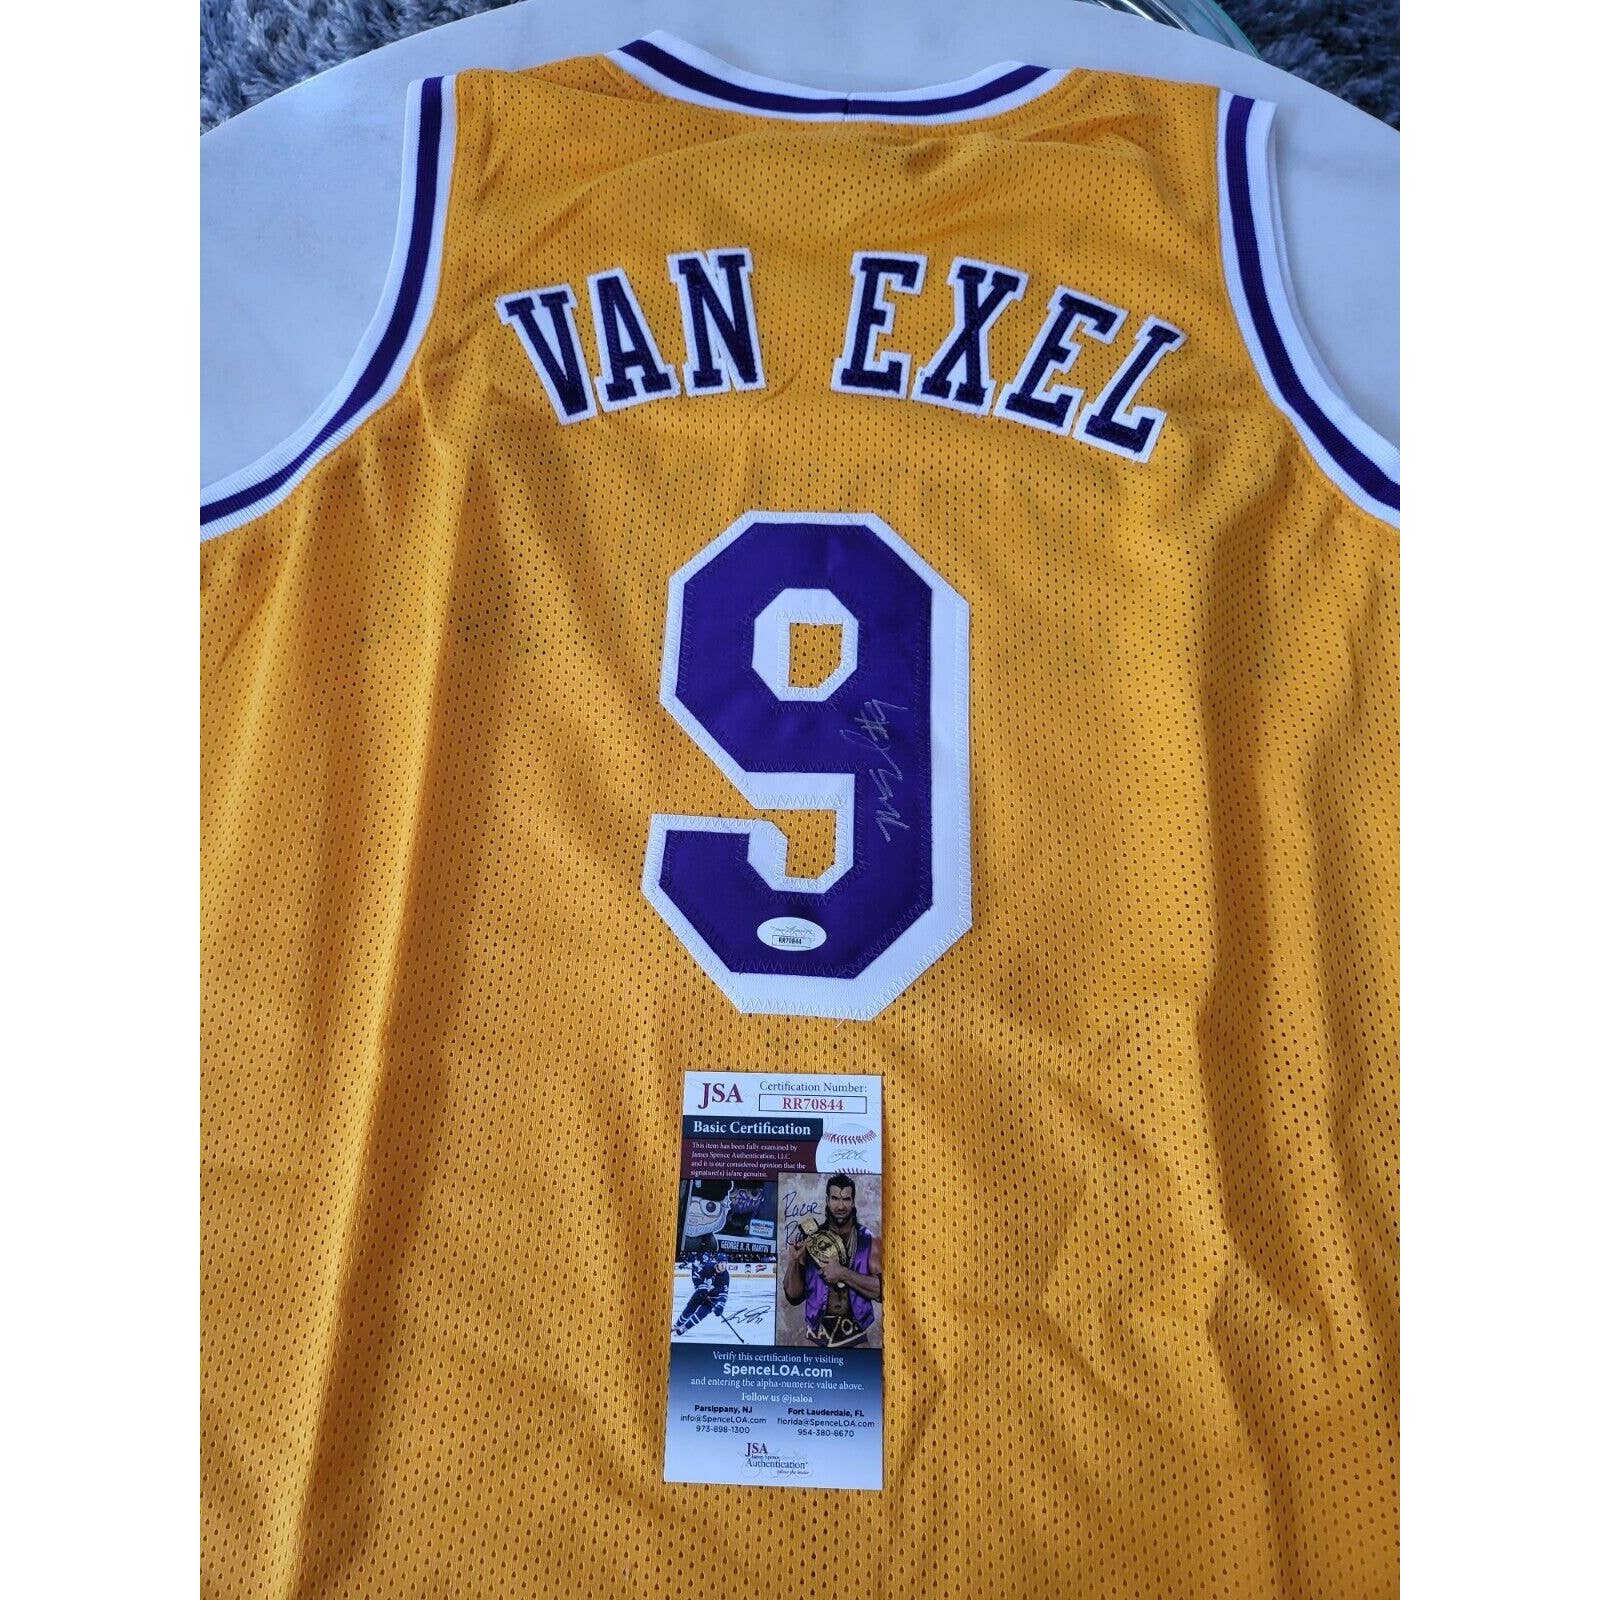 Nick Van Exel Autographed/Signed Jersey JSA COA Los Angeles Lakers LA - TreasuresEvolved